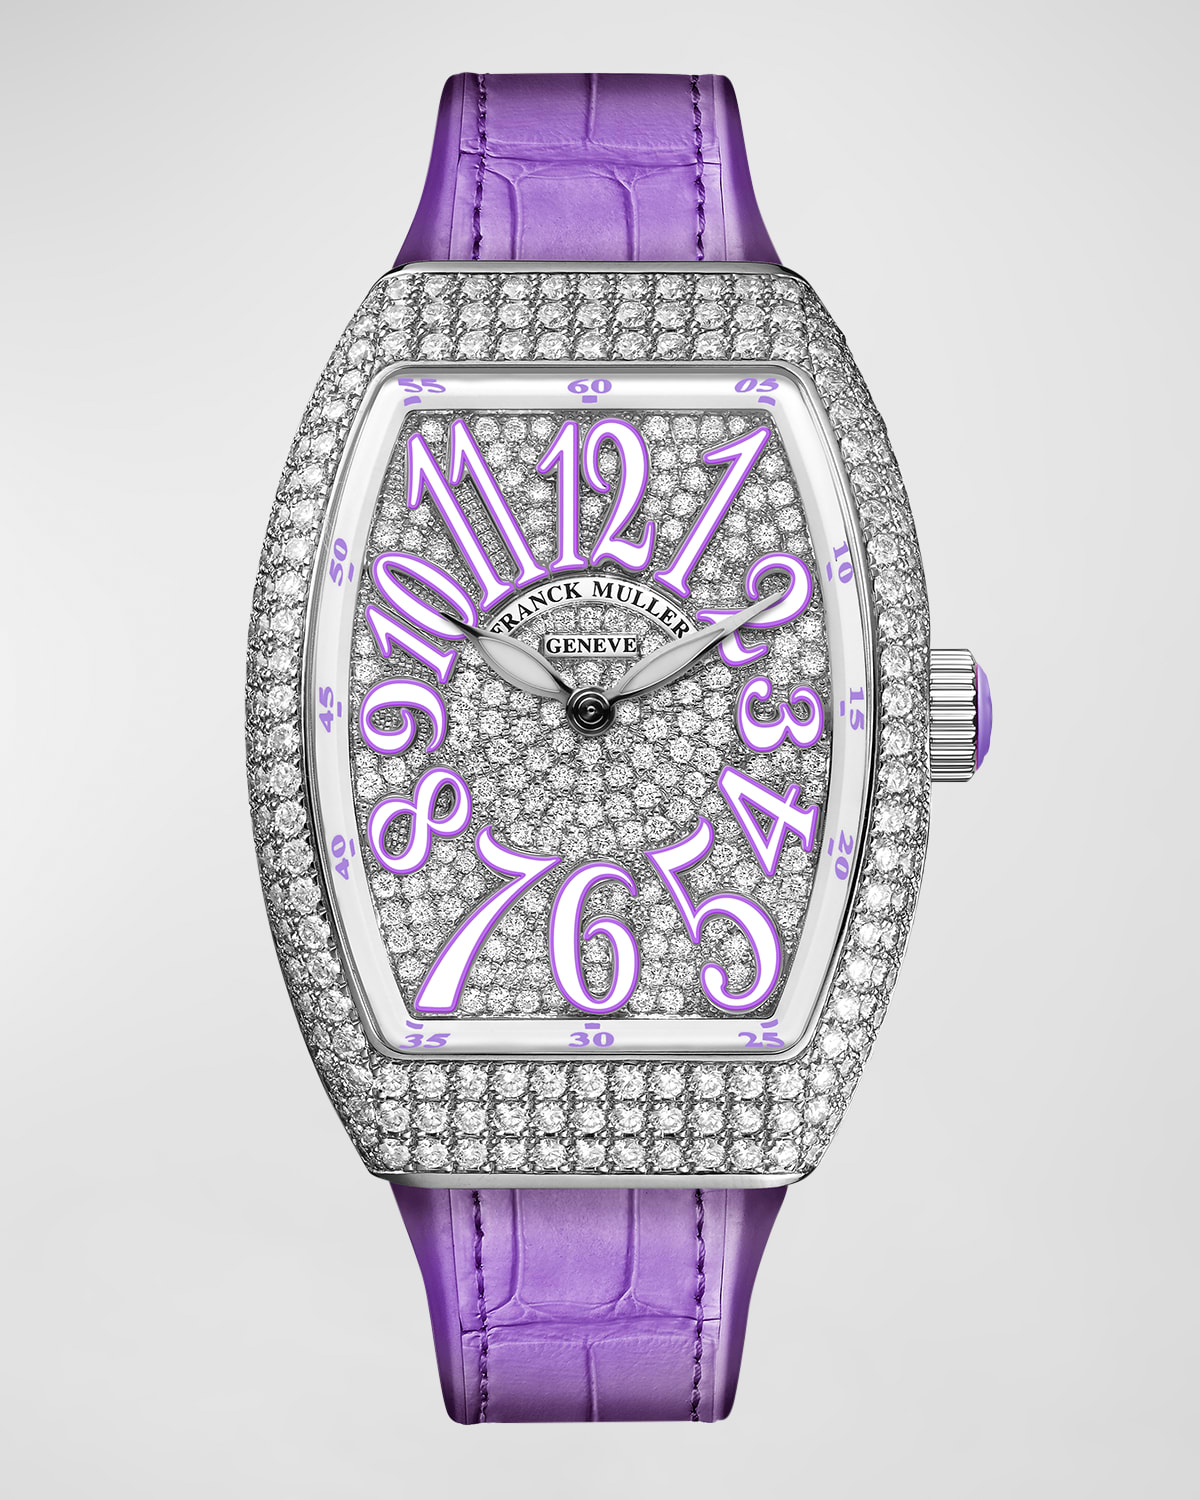 Lady Vanguard Diamond Watch w/ Alligator Strap, Purple